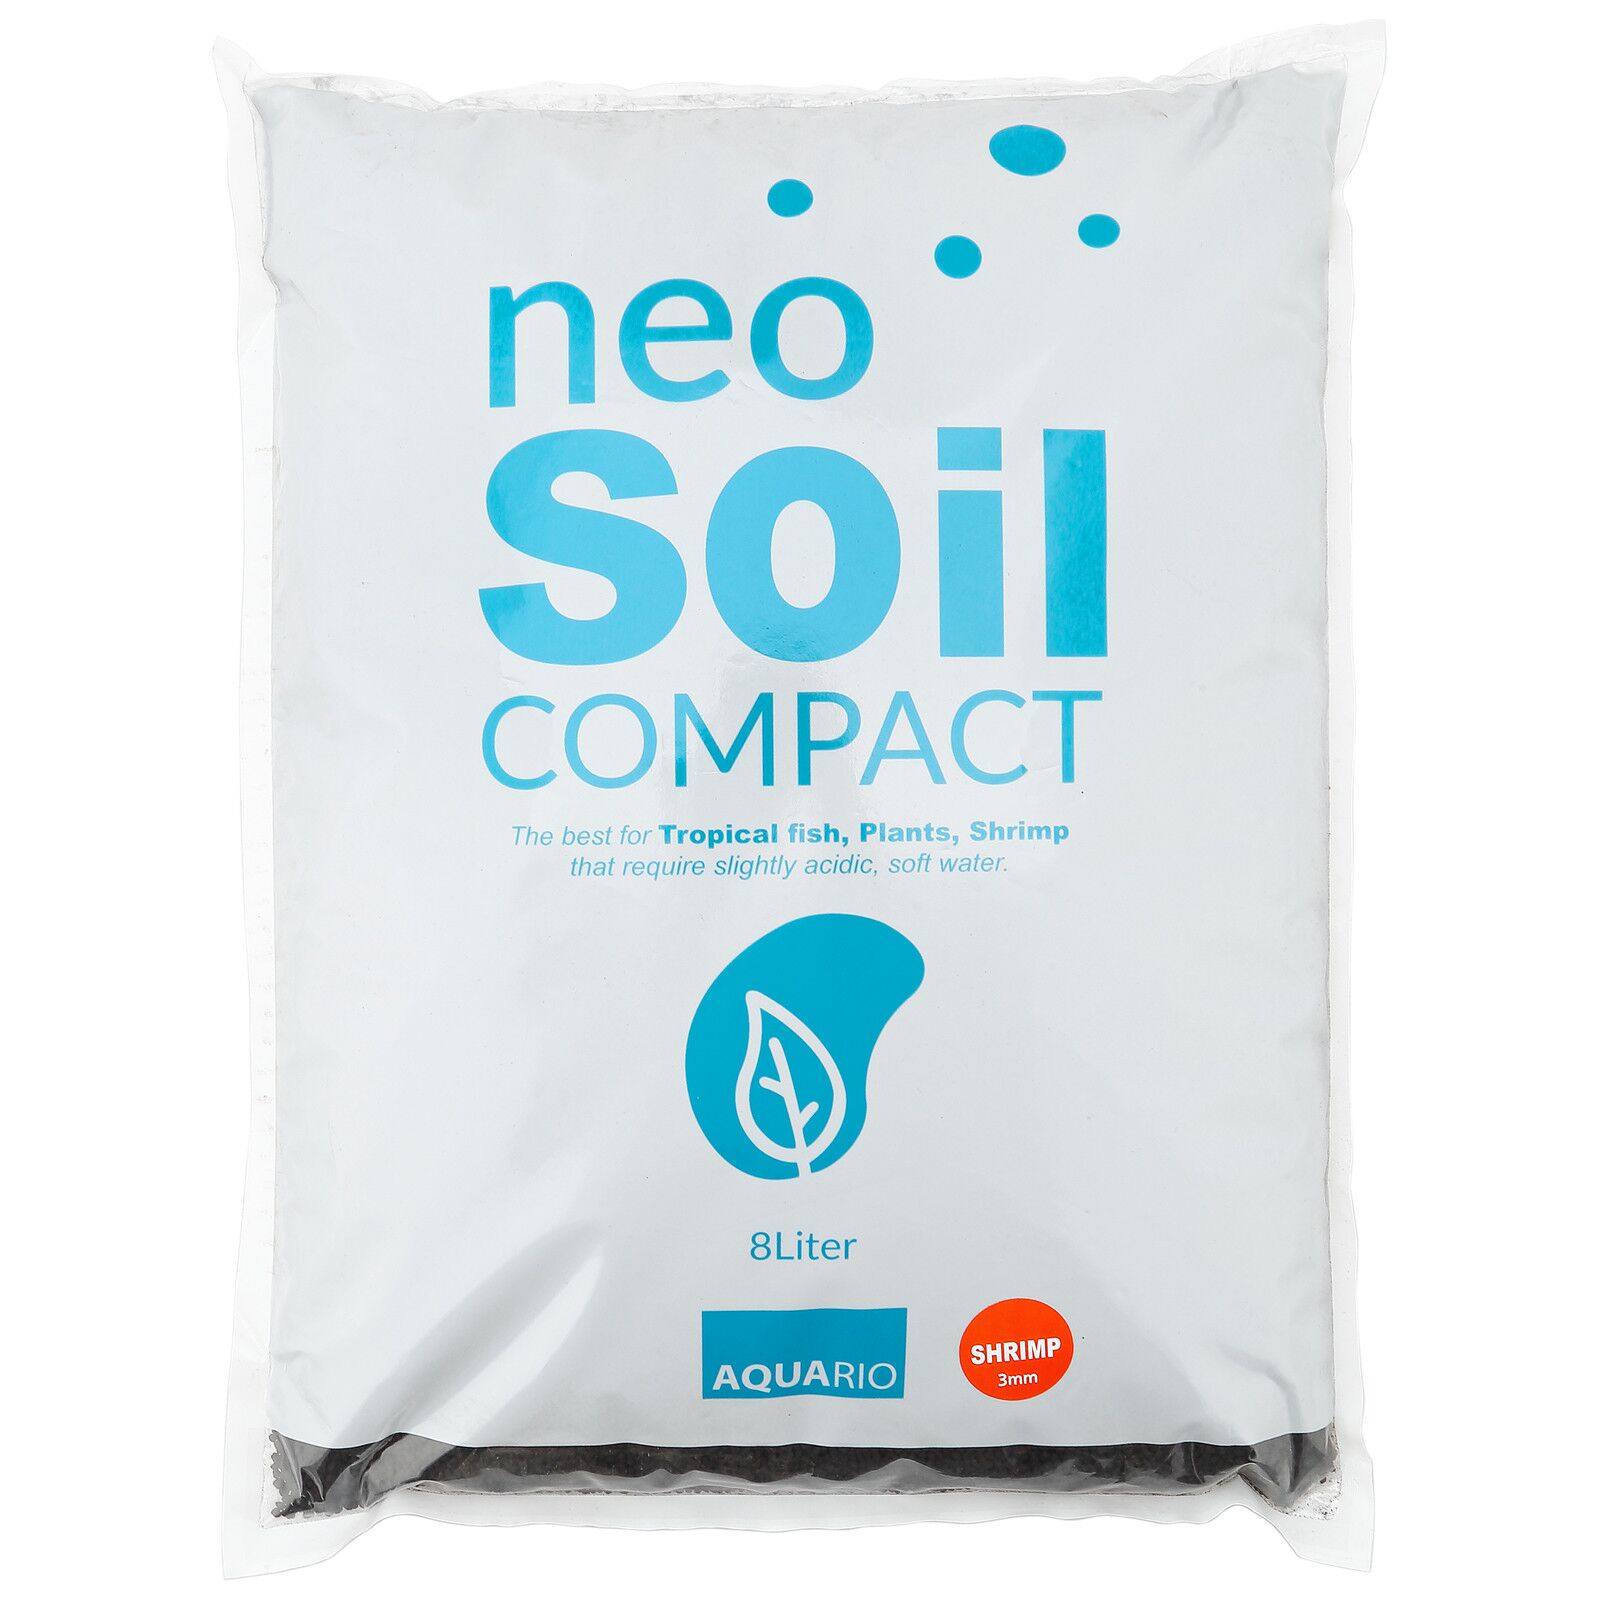 AQUARIO - Neo Soil Compact - Shrimp